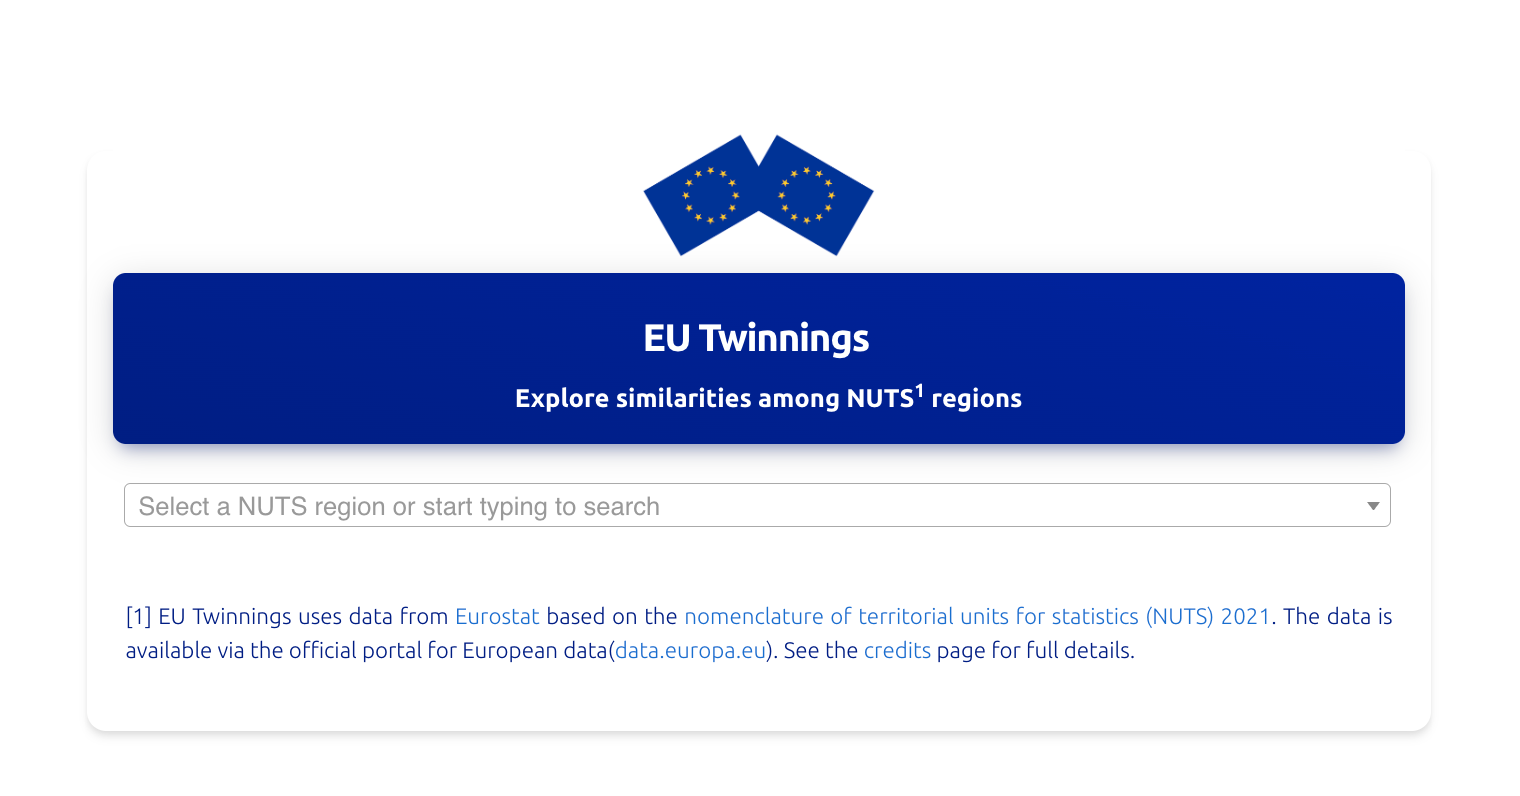 Screenshot of the landing page in the EU Twinnings application